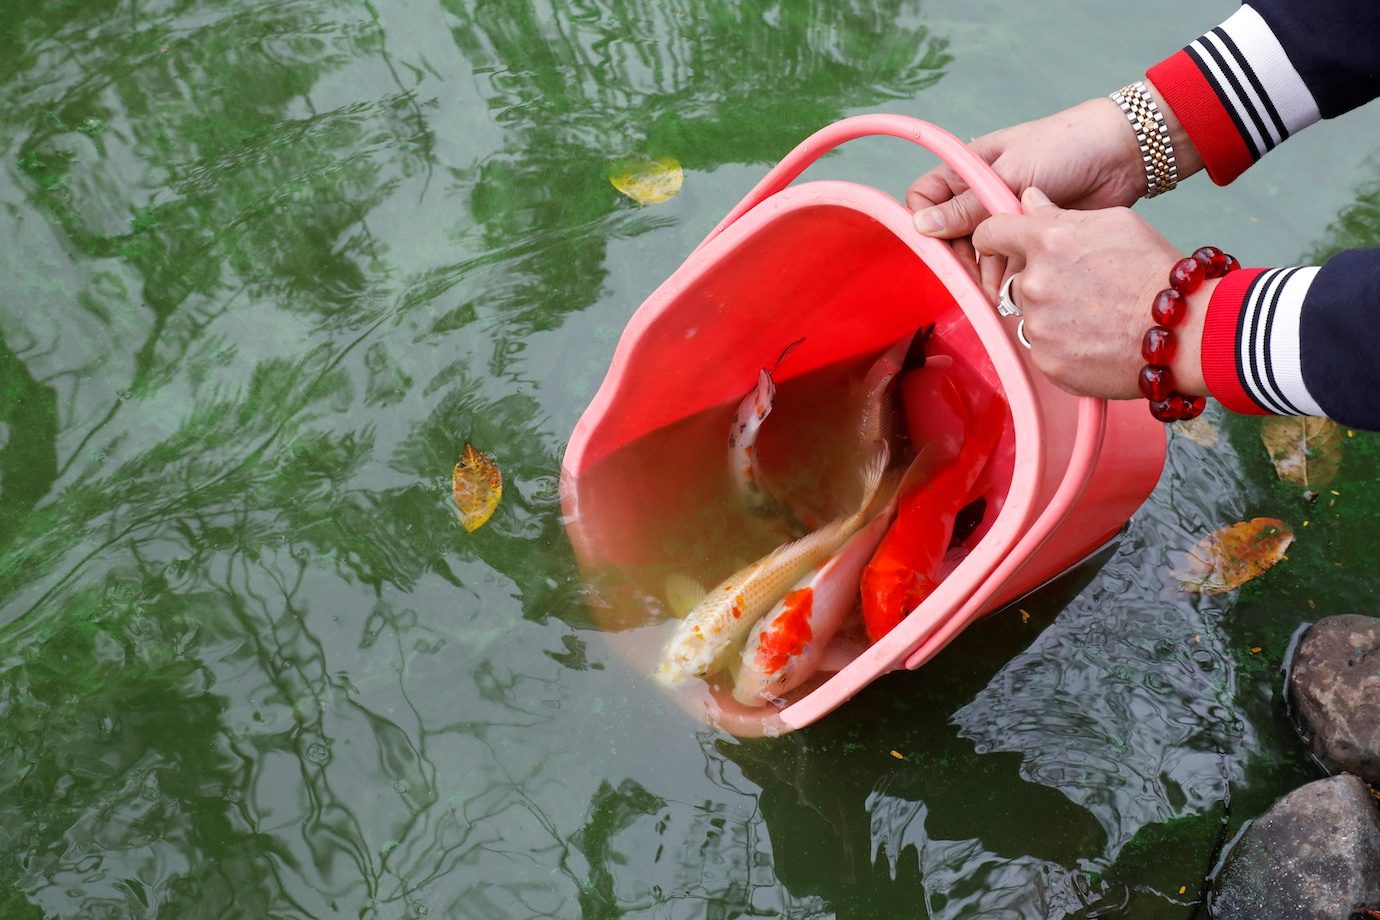 Carp diem: Vietnamese mark Lunar New Year with annual fish release